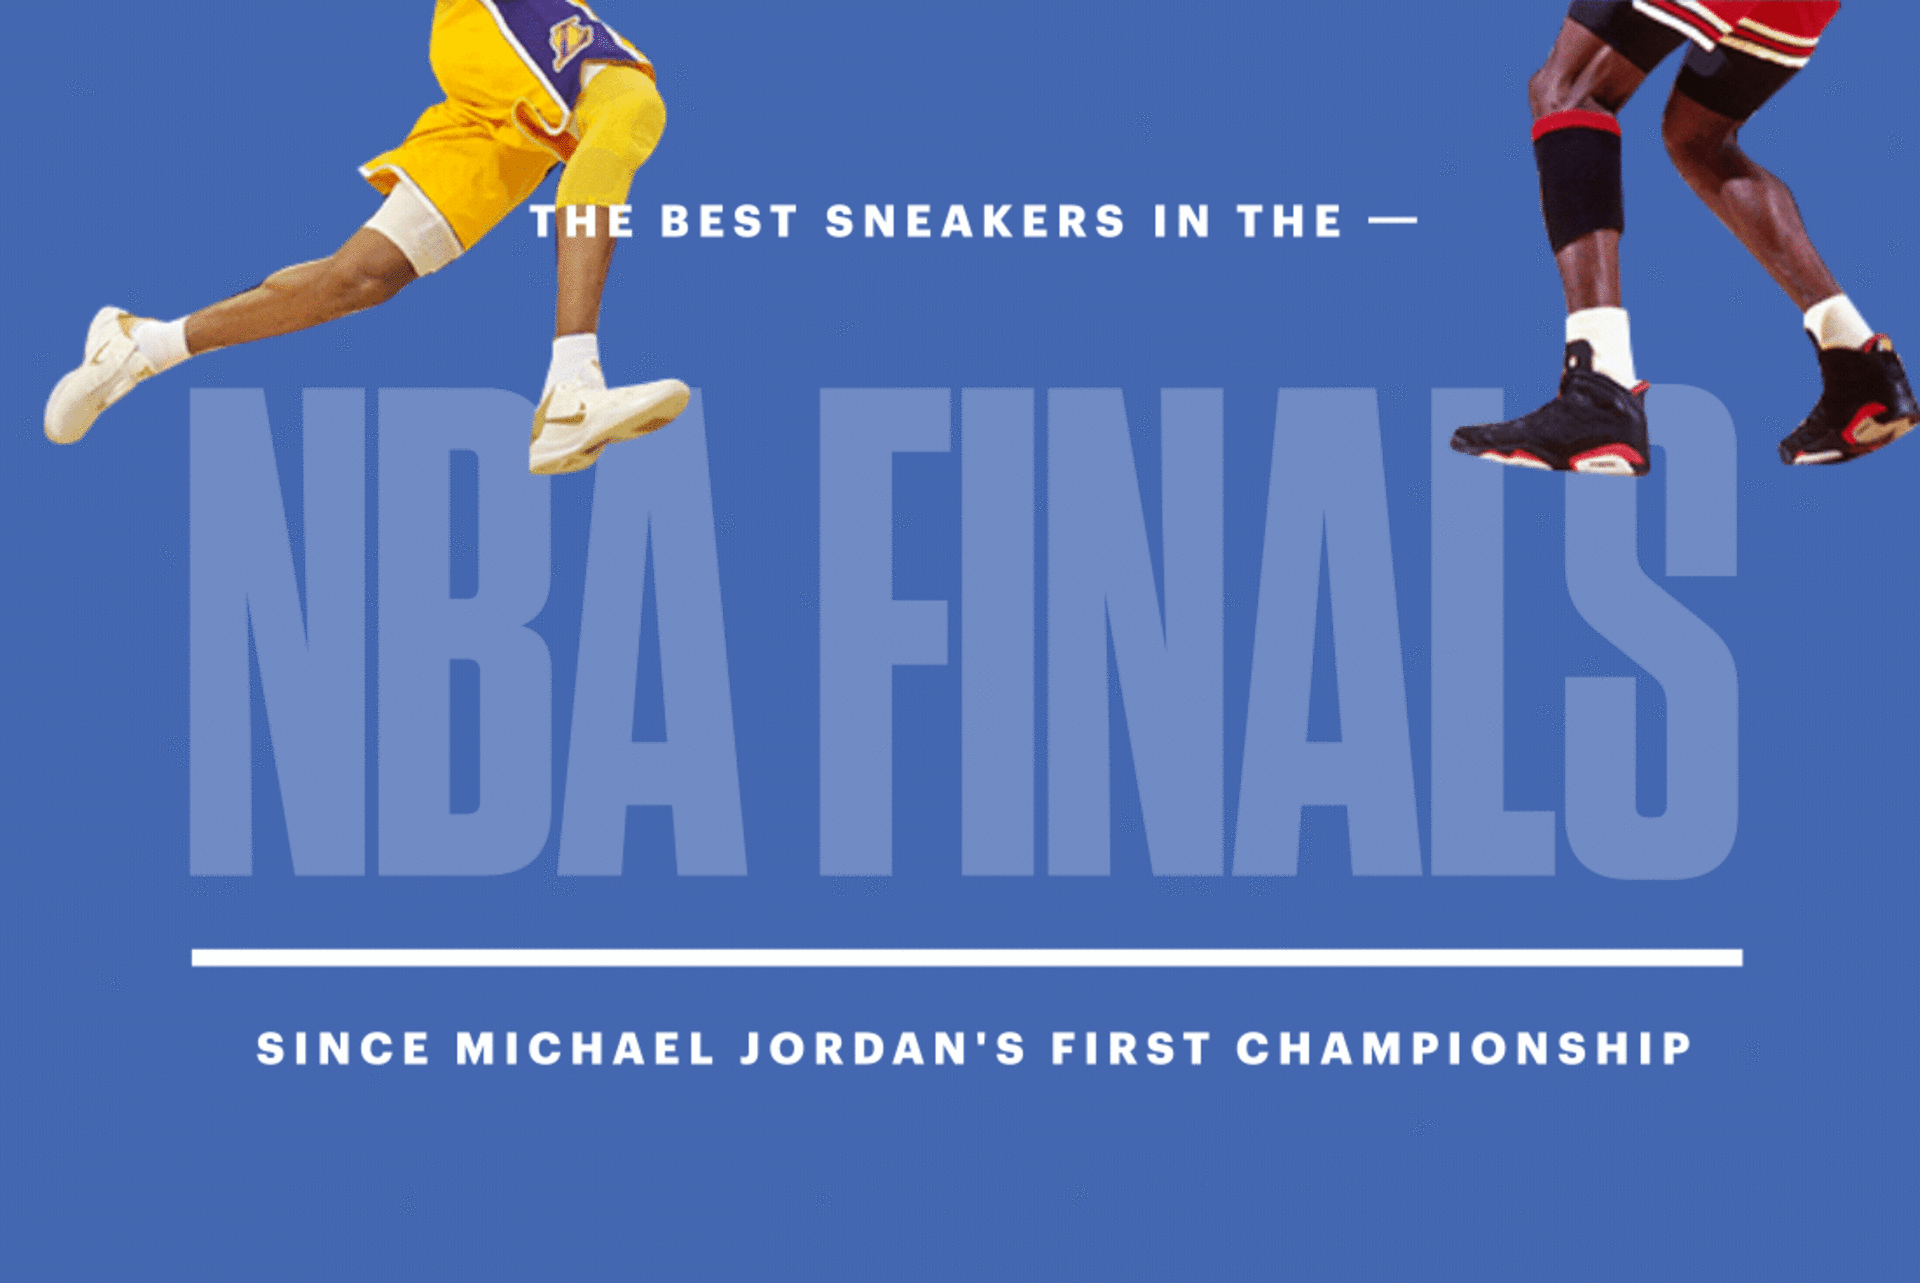 jordan's first championship shoe